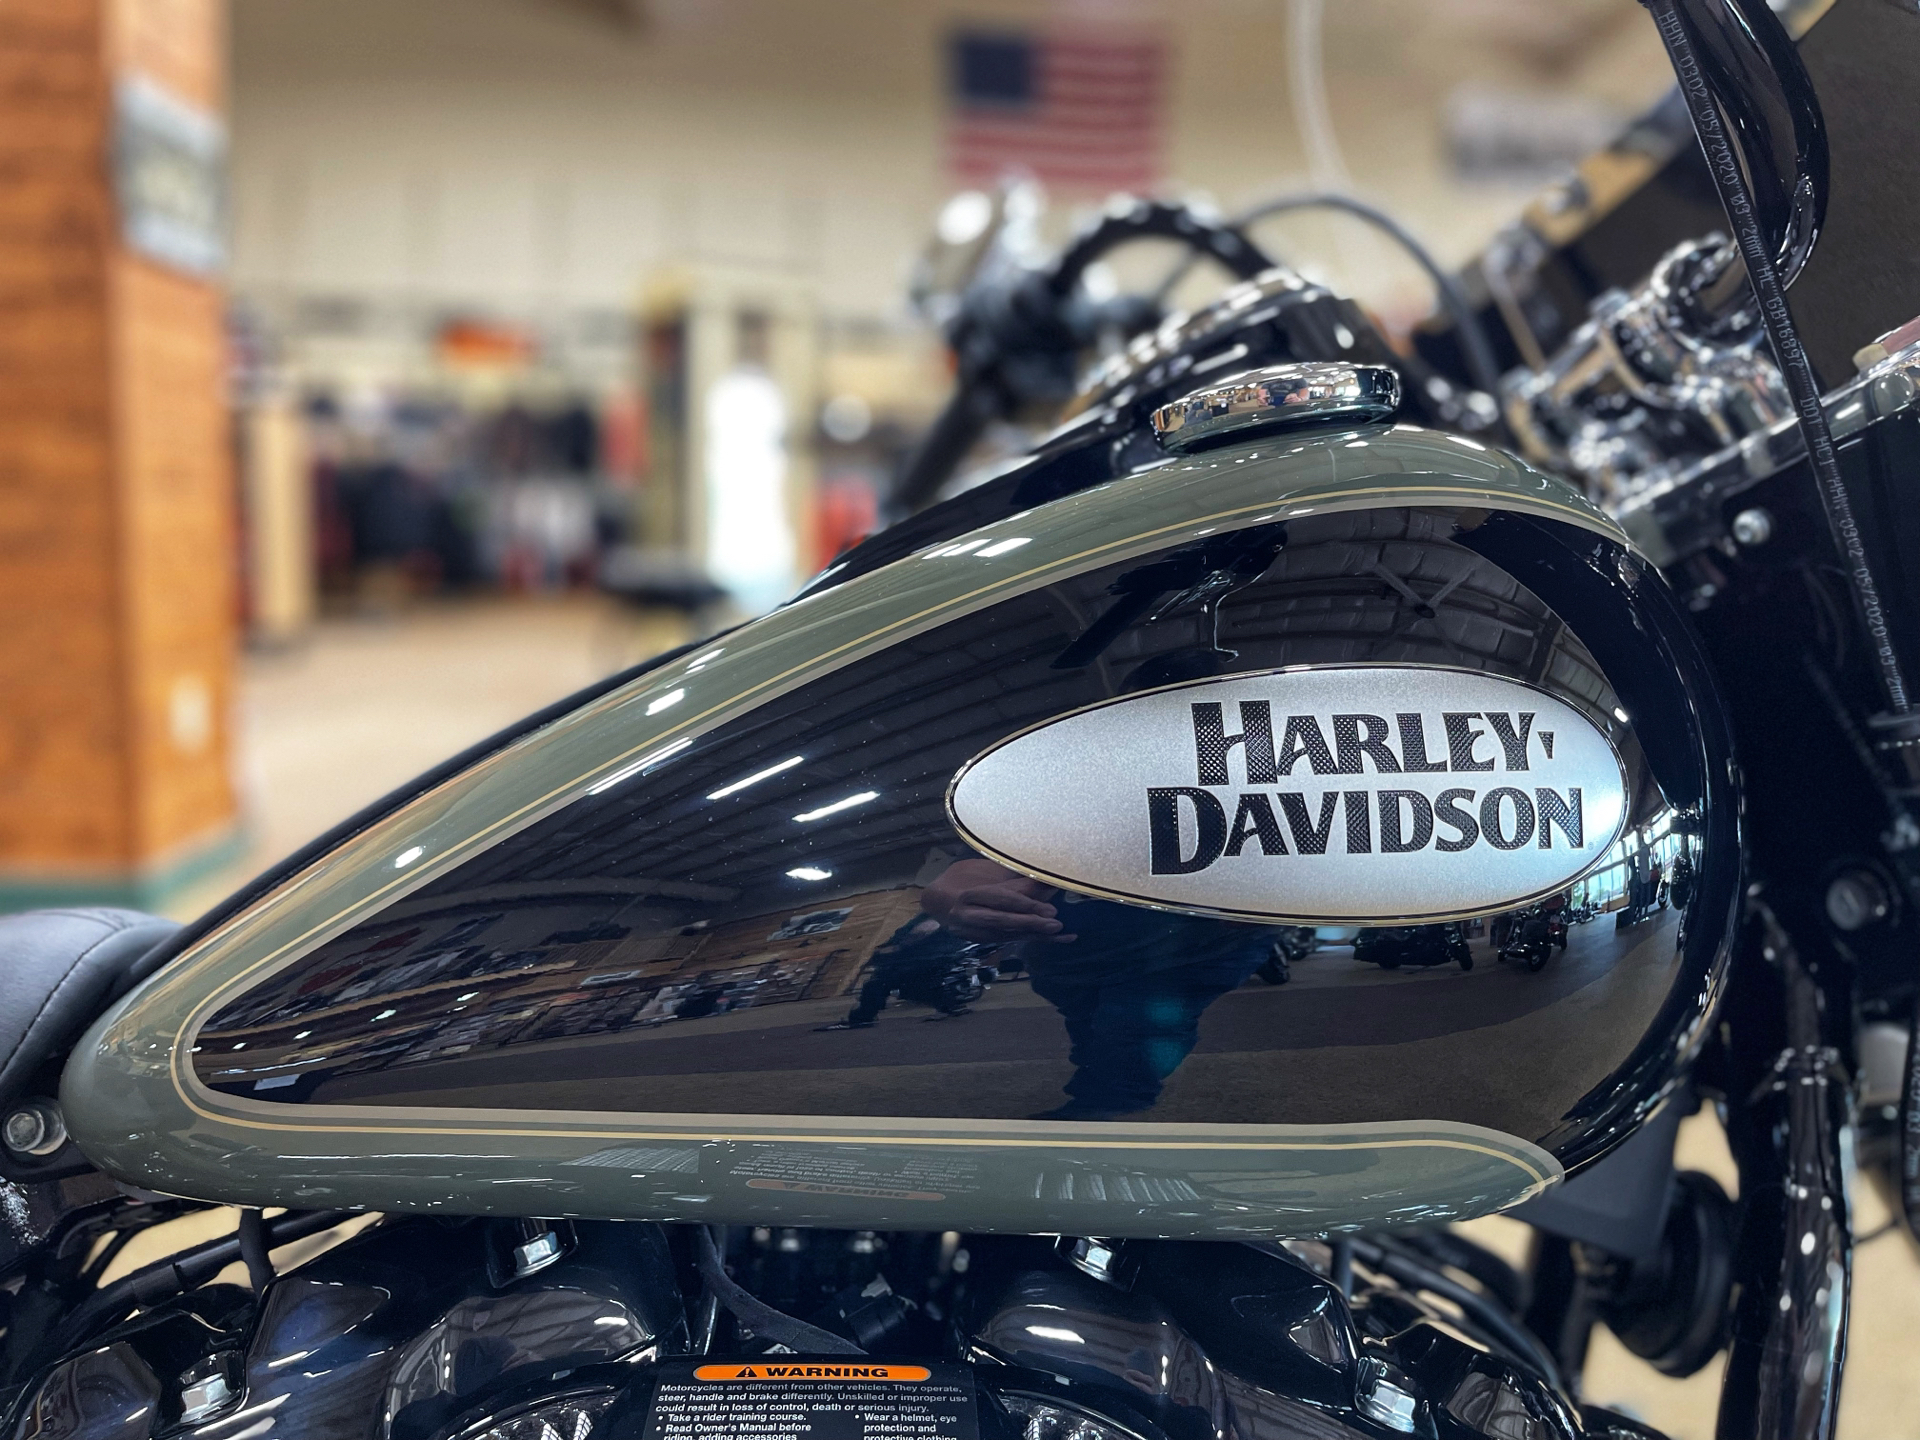 New 2021 Harley Davidson Heritage Classic 114 Deadwood Green Vivid Black Motorcycles In Sauk Rapids Mn 035431